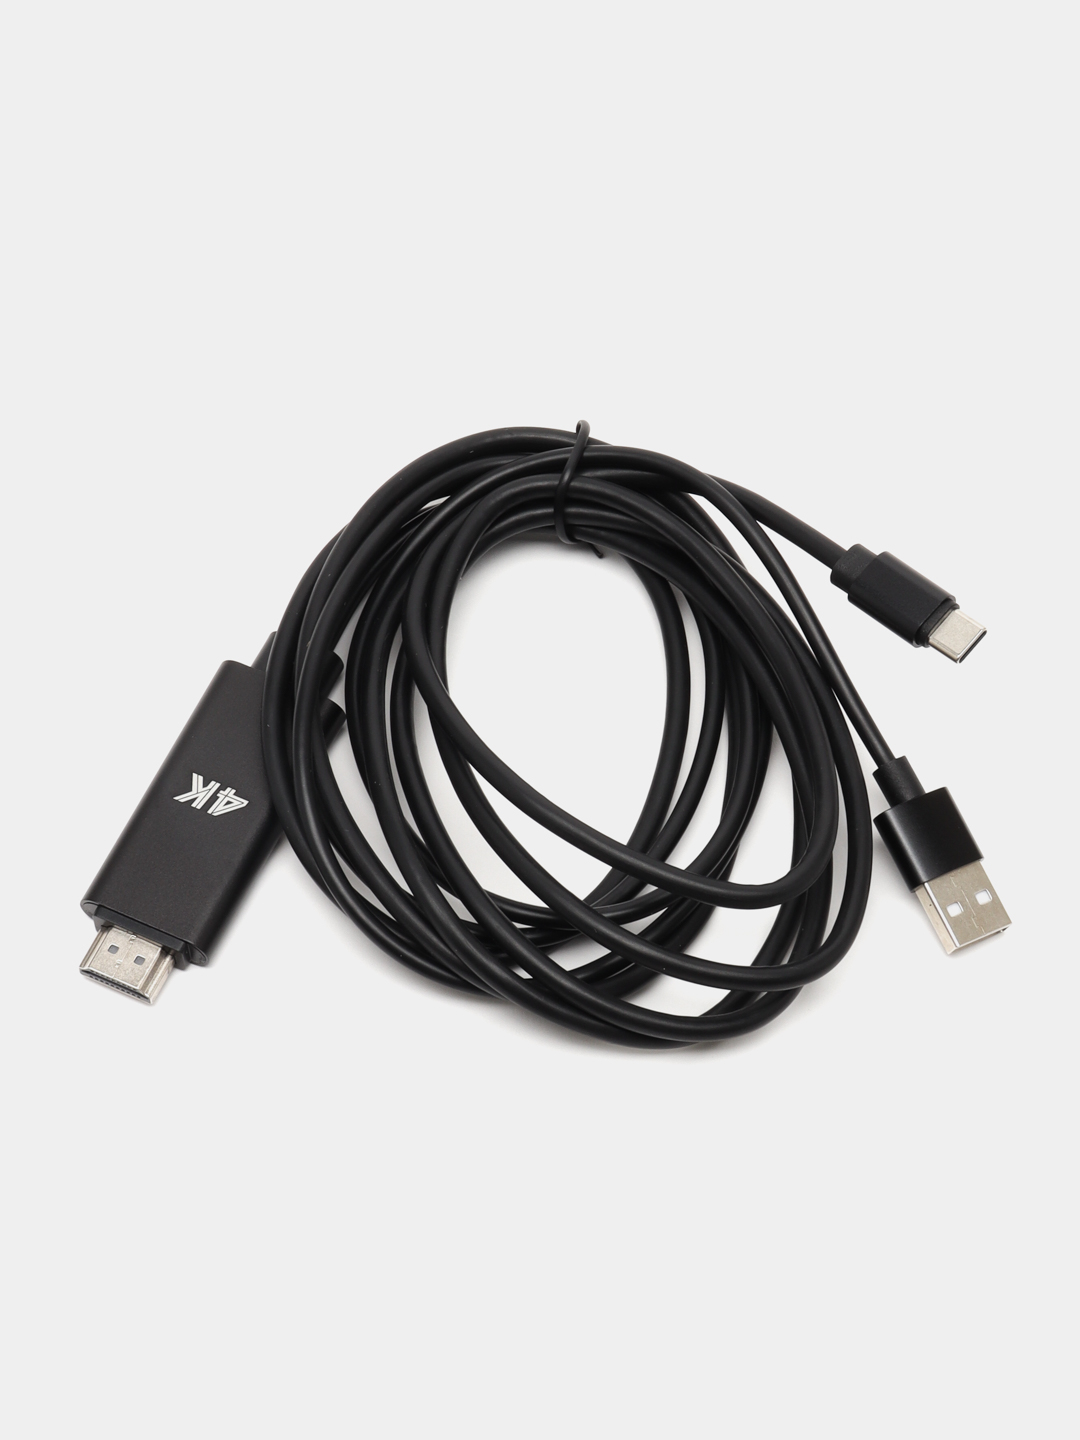 Цифровой конвертер USB to HDMI для Подключения смартфона к телевизору